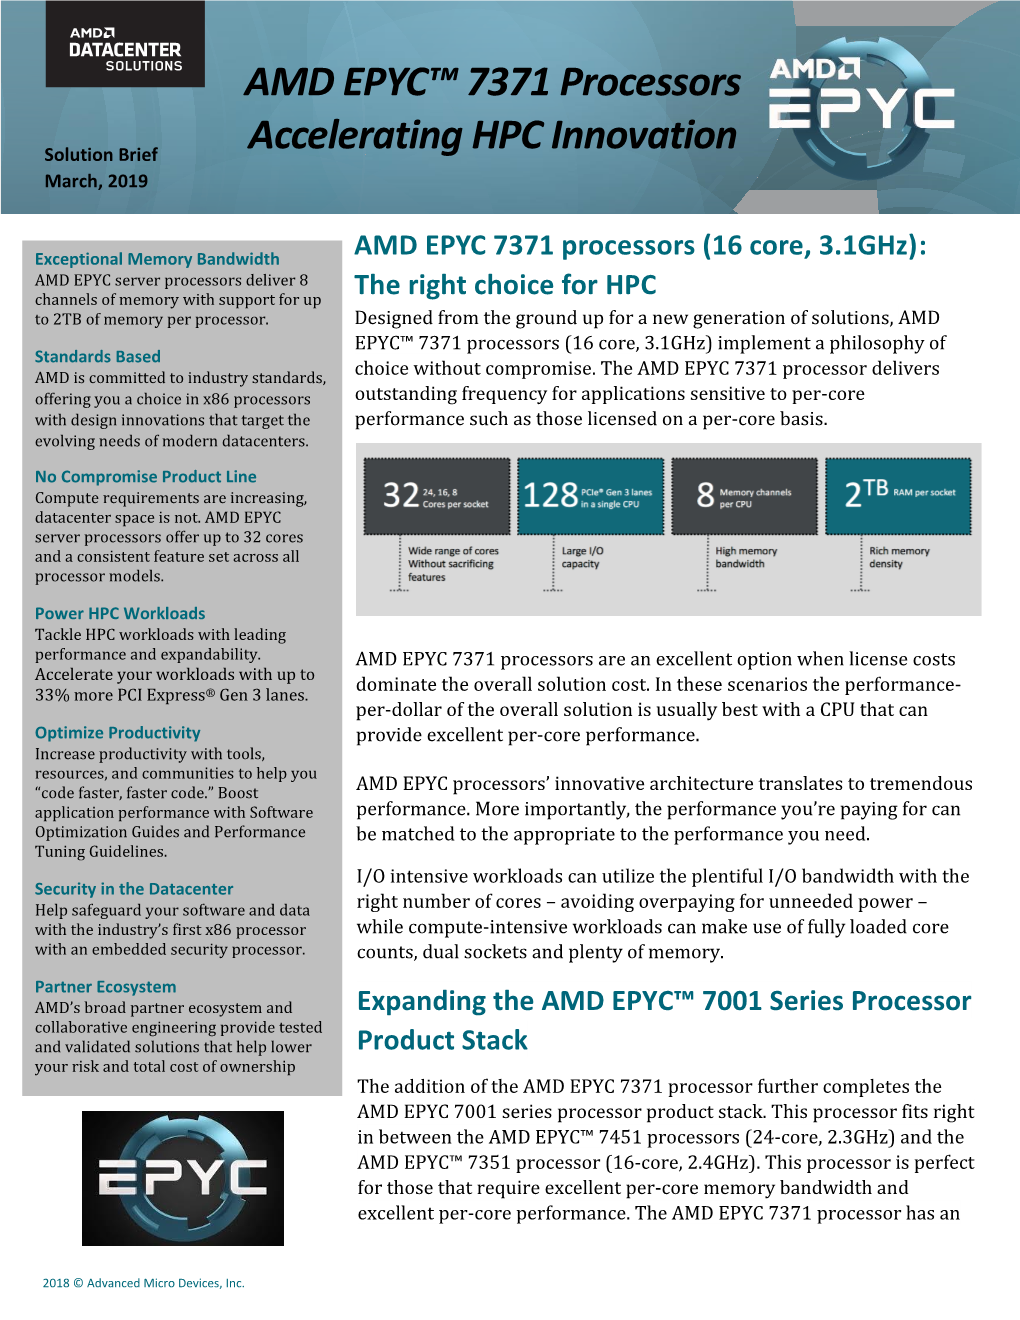 AMD EPYC™ 7371 Processors Accelerating HPC Innovation